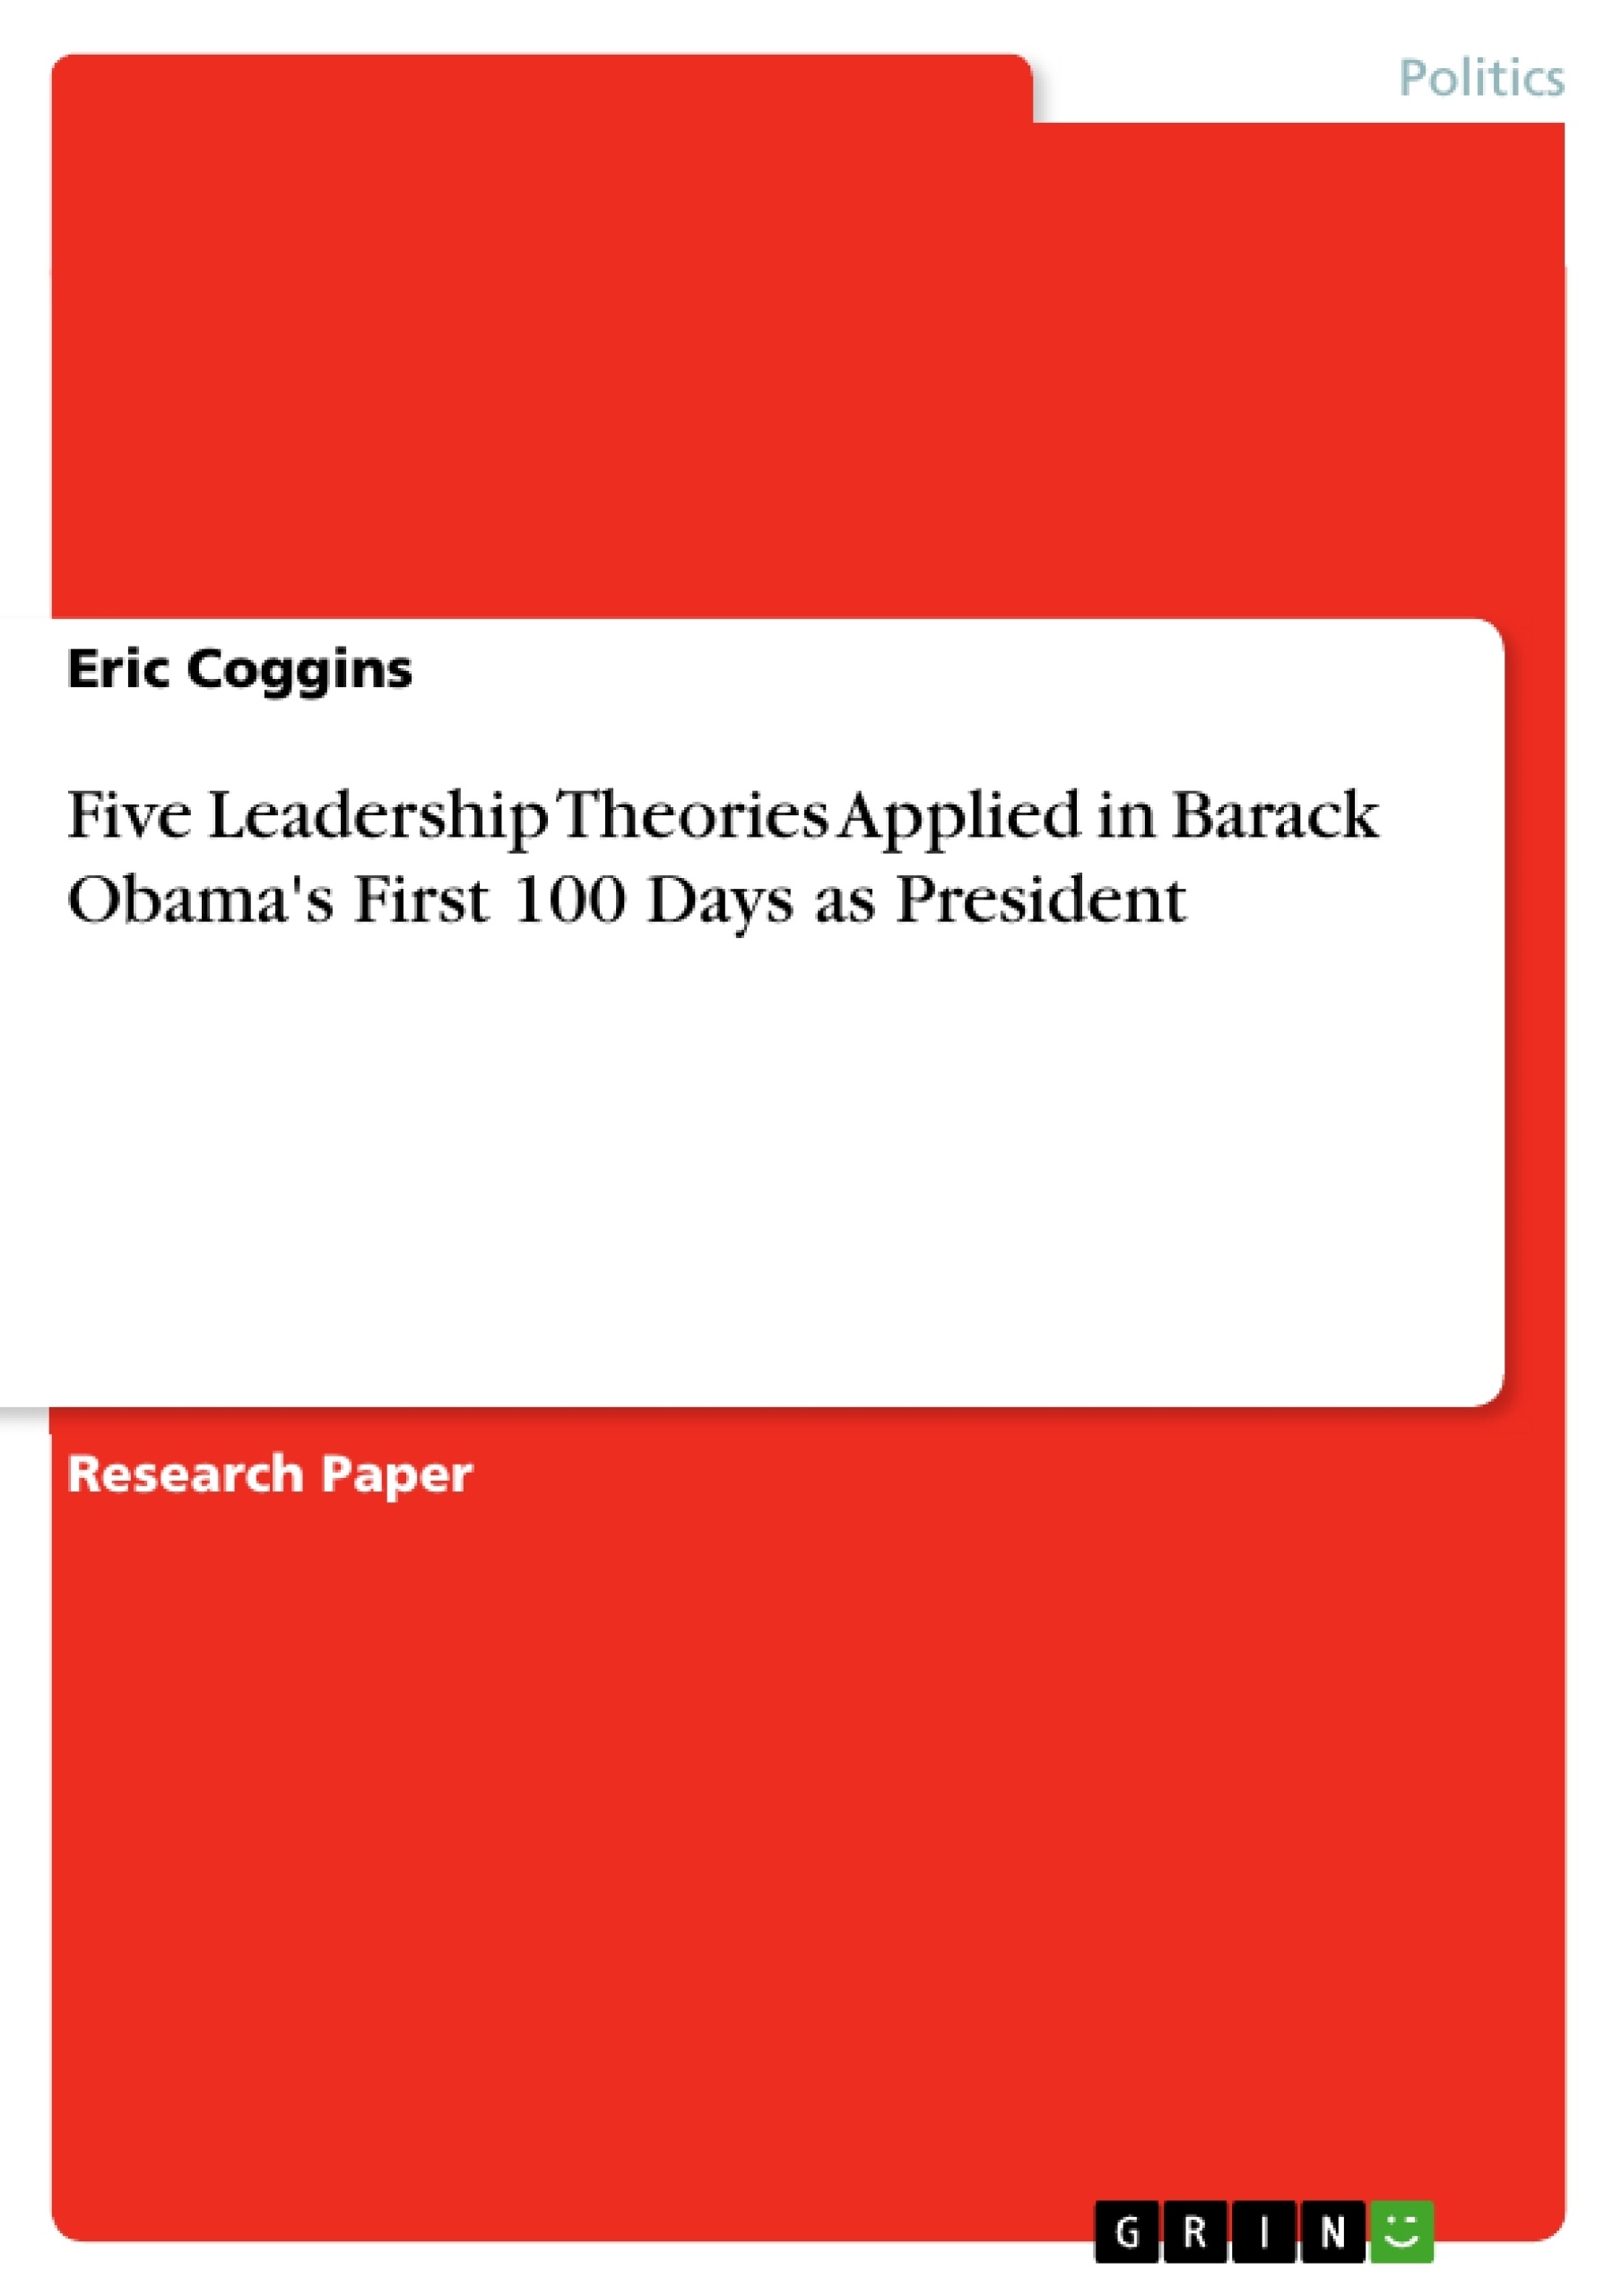 Obama research paper